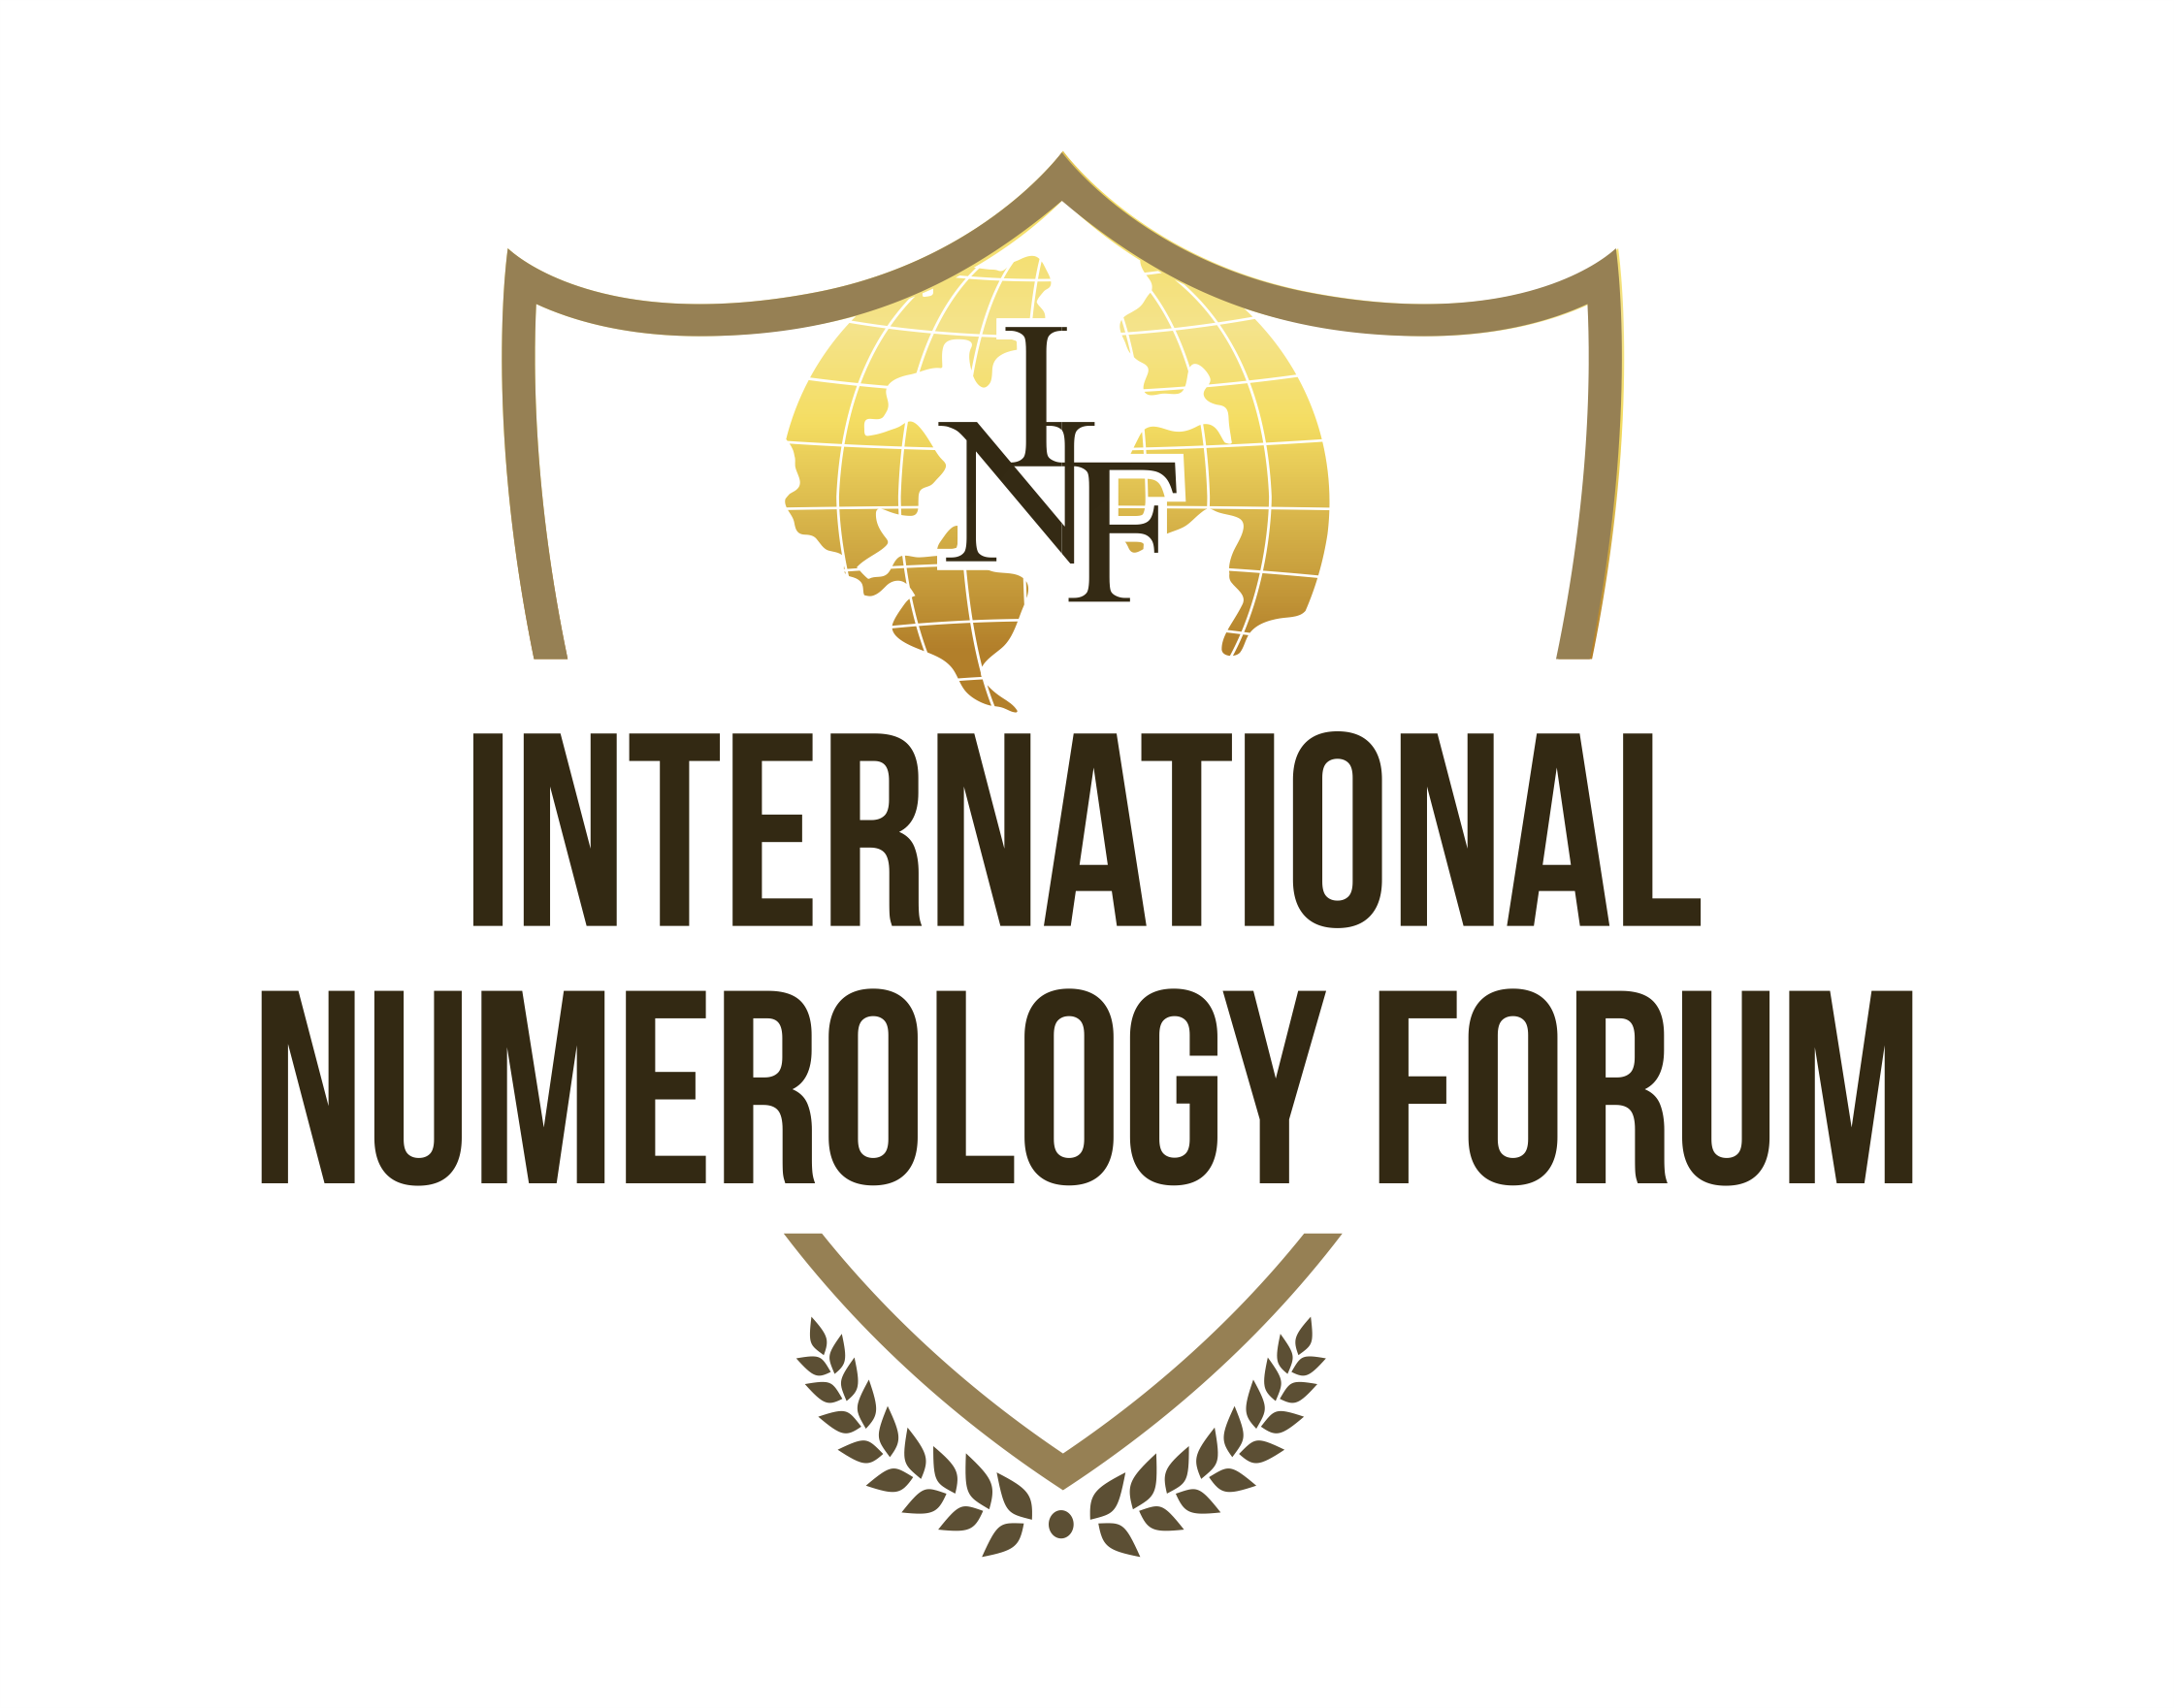 International Numerology Forum